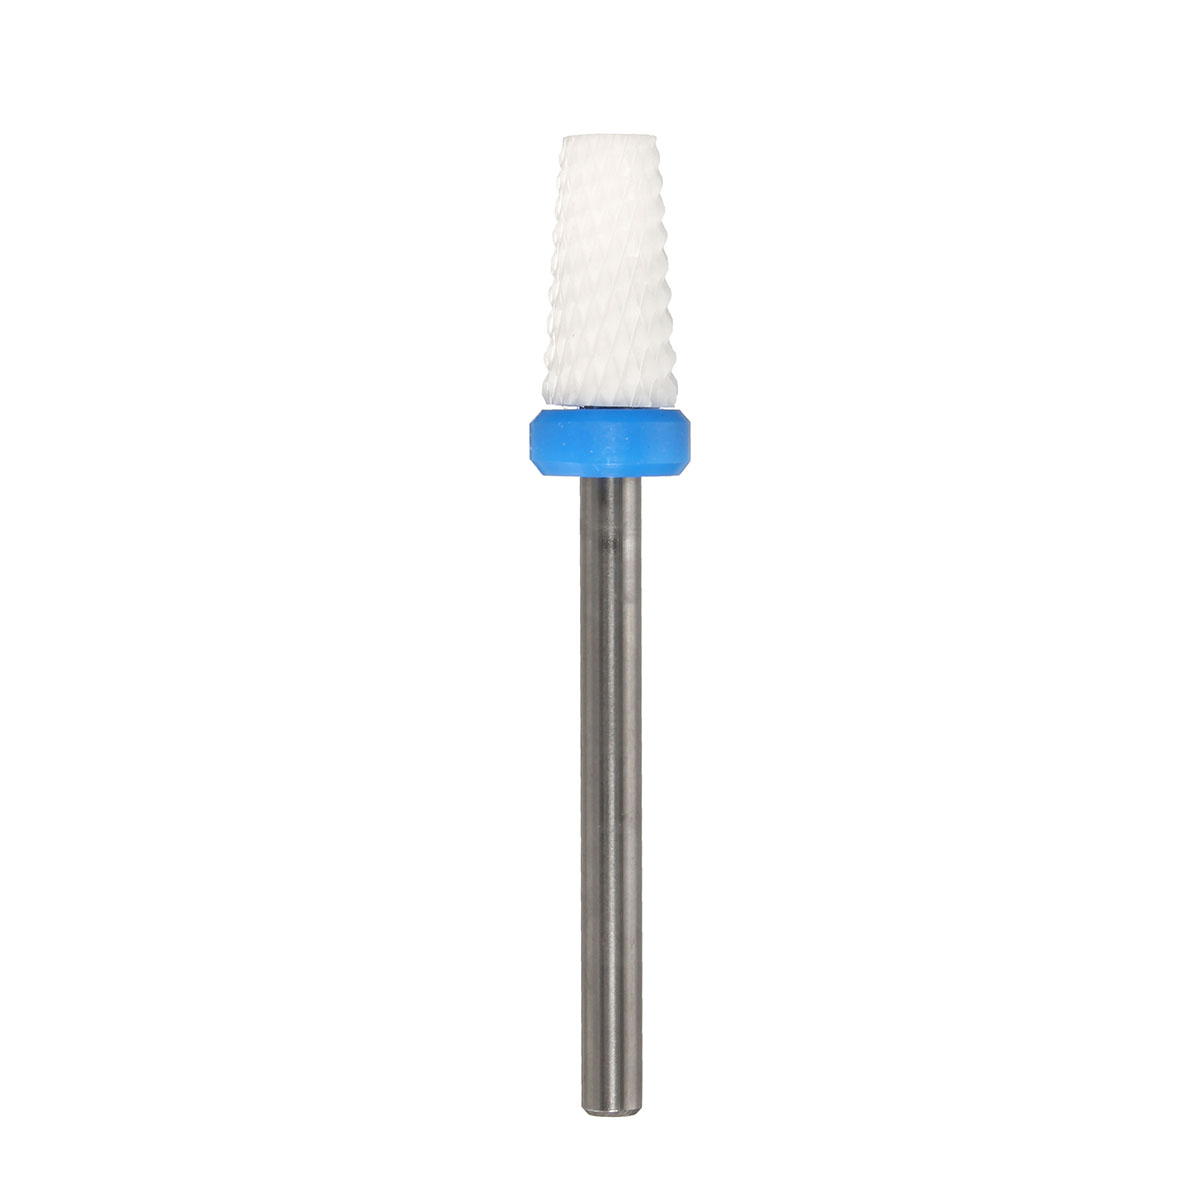 5pcs-Ceramic-Nail-Drill-Bit-Set-Smooth-Tapered-Brush-Rotary-File-Cuticle-Manicure-Pedicure-Salon-Kit-1129869-5